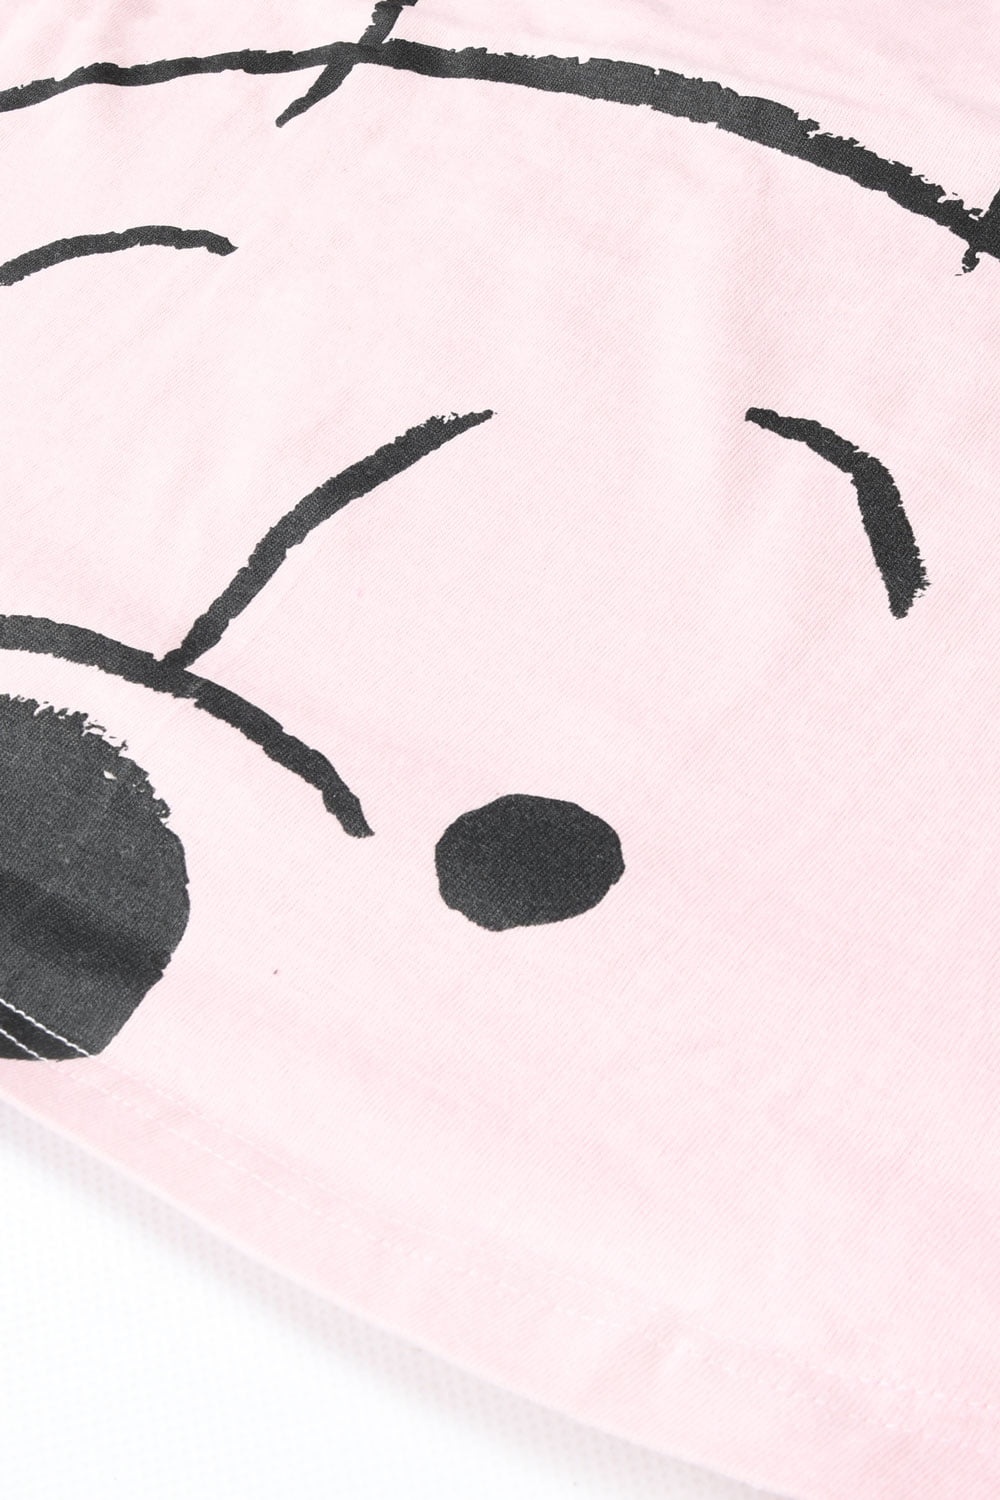 Disney Winnie The Pooh Ladies BCI Cotton Pyjama - Brand Threads